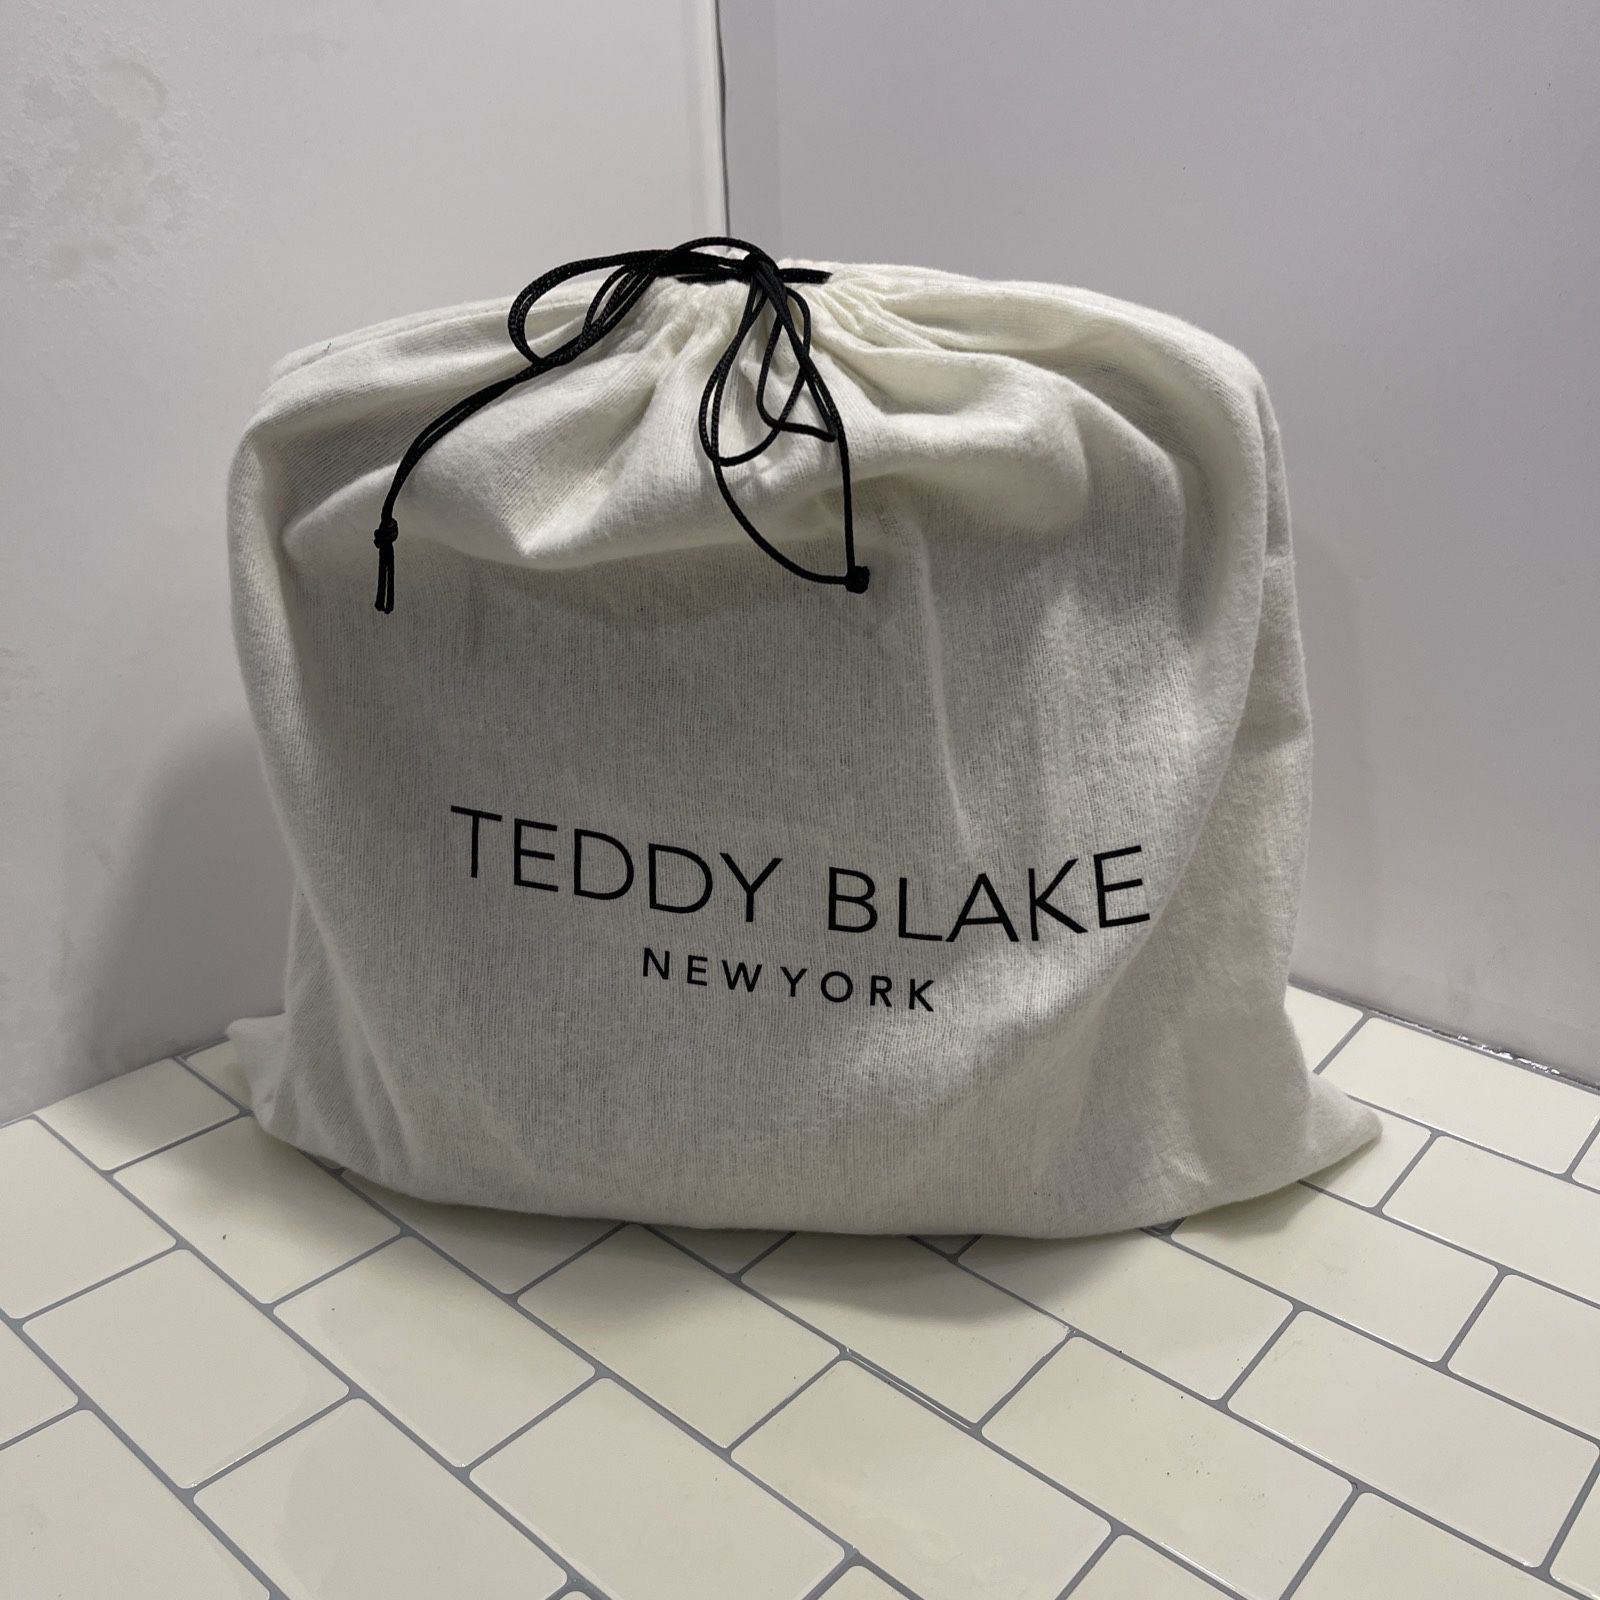 New Teddy Blake Eliza Vitello 9” Bucket Leather Bag Camel